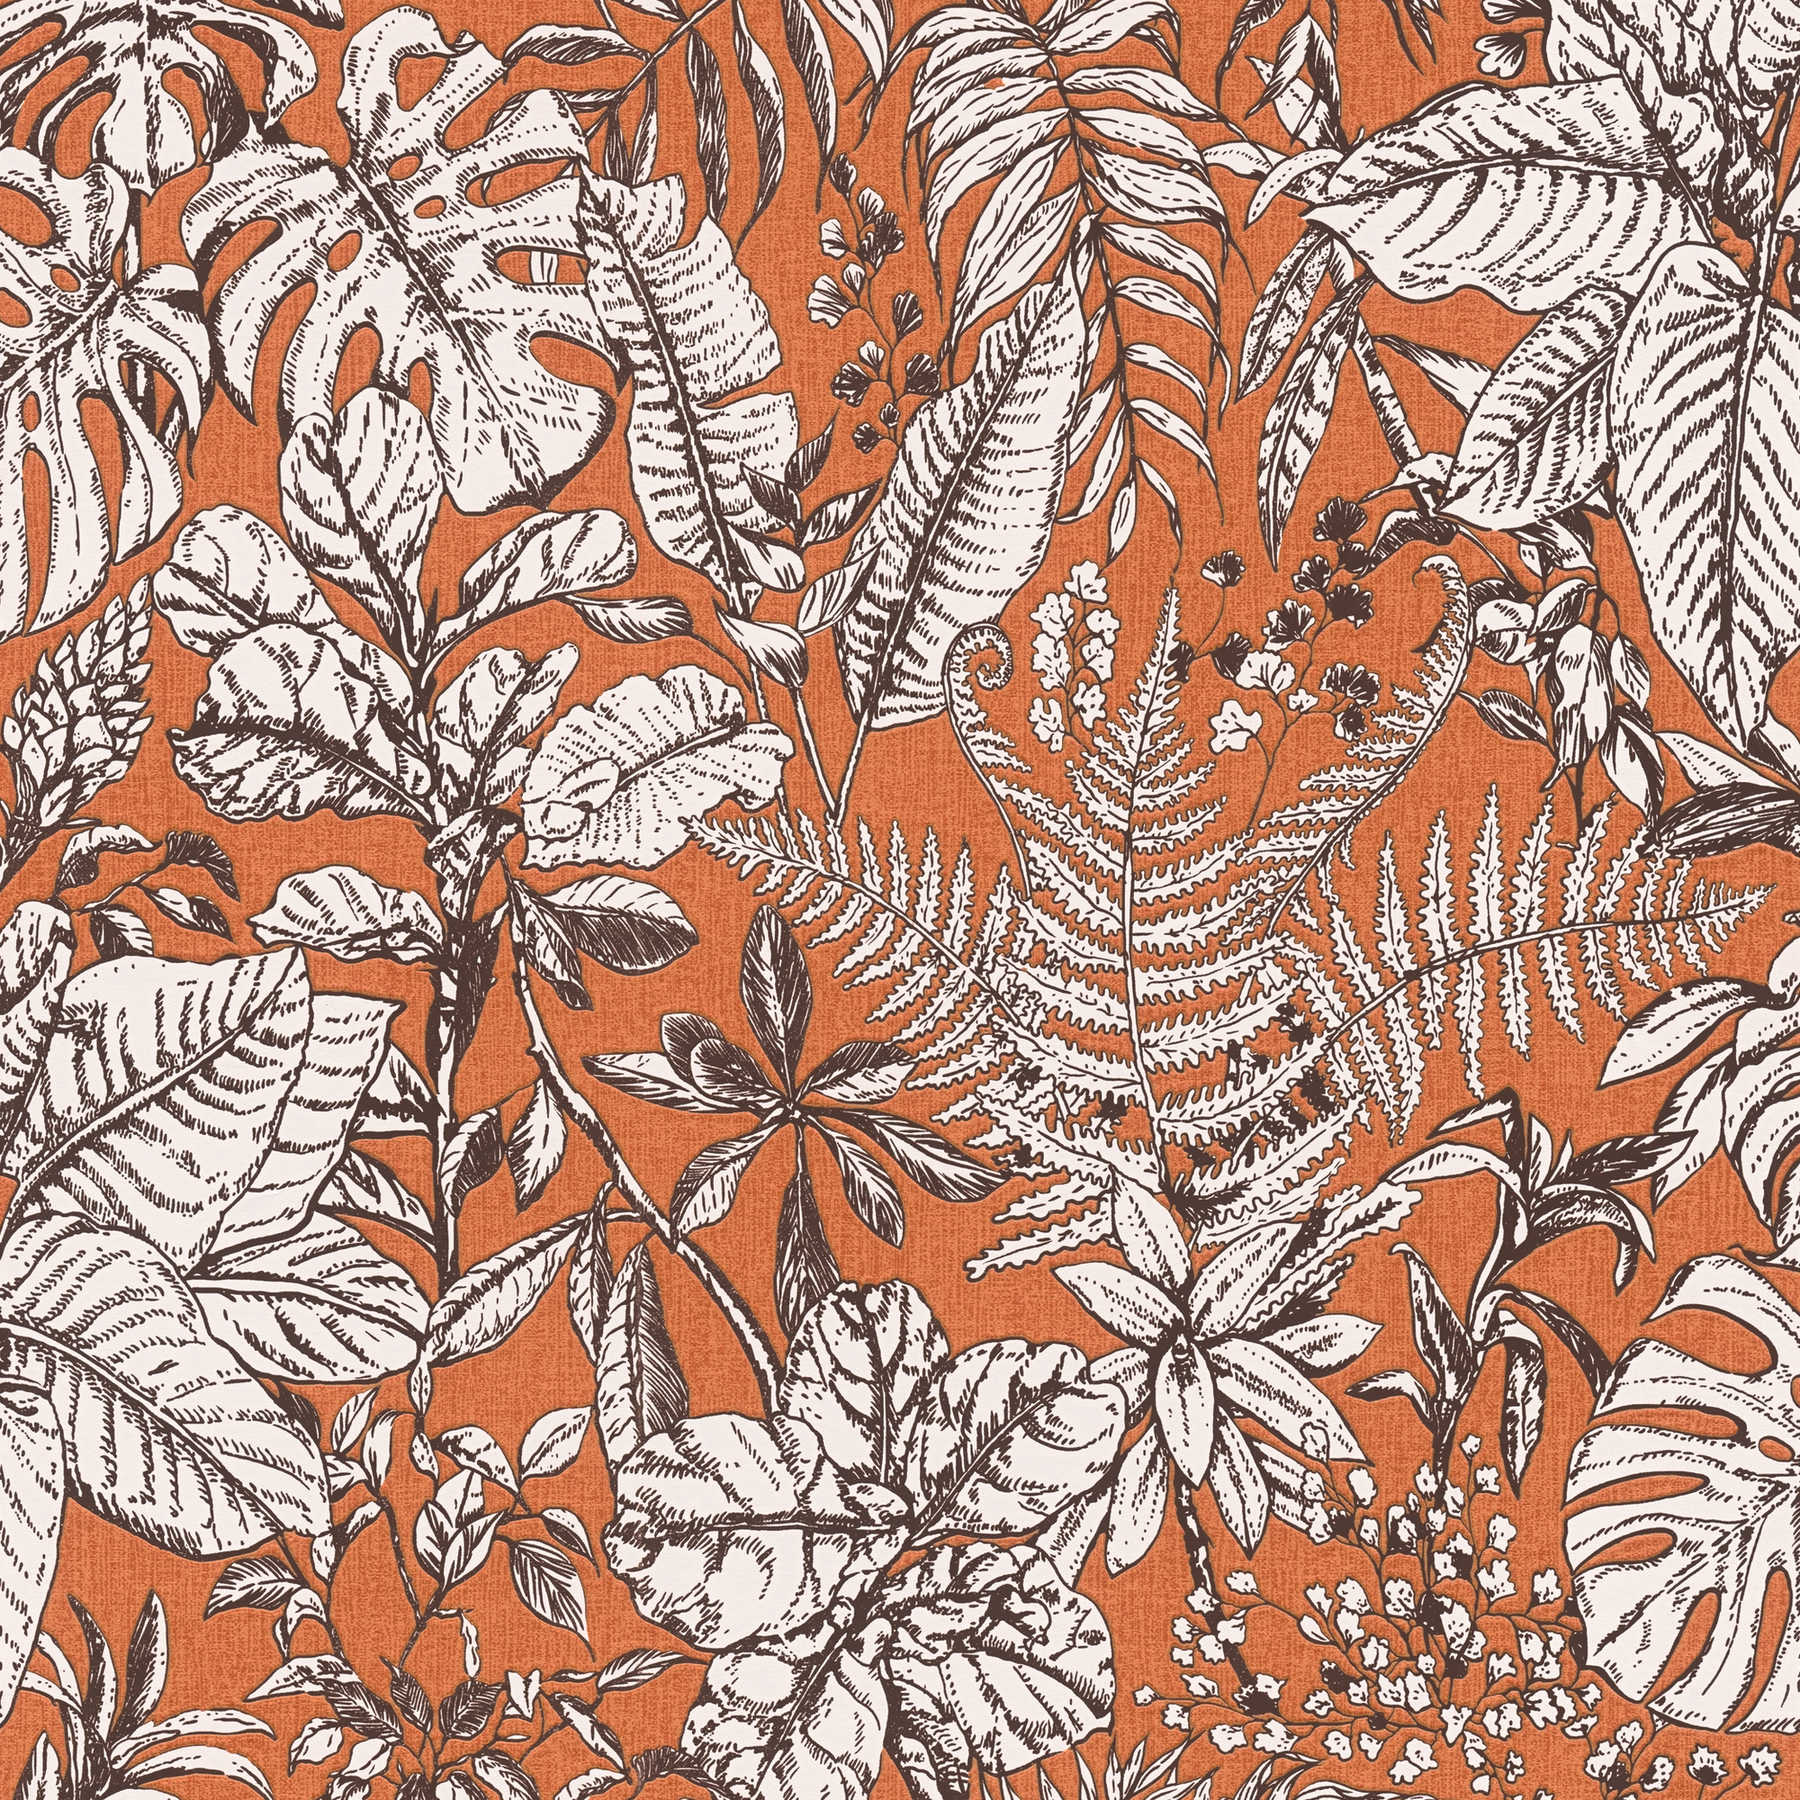         Patroonbehang jungle bladeren, monstera & varens - oranje, wit, bruin
    